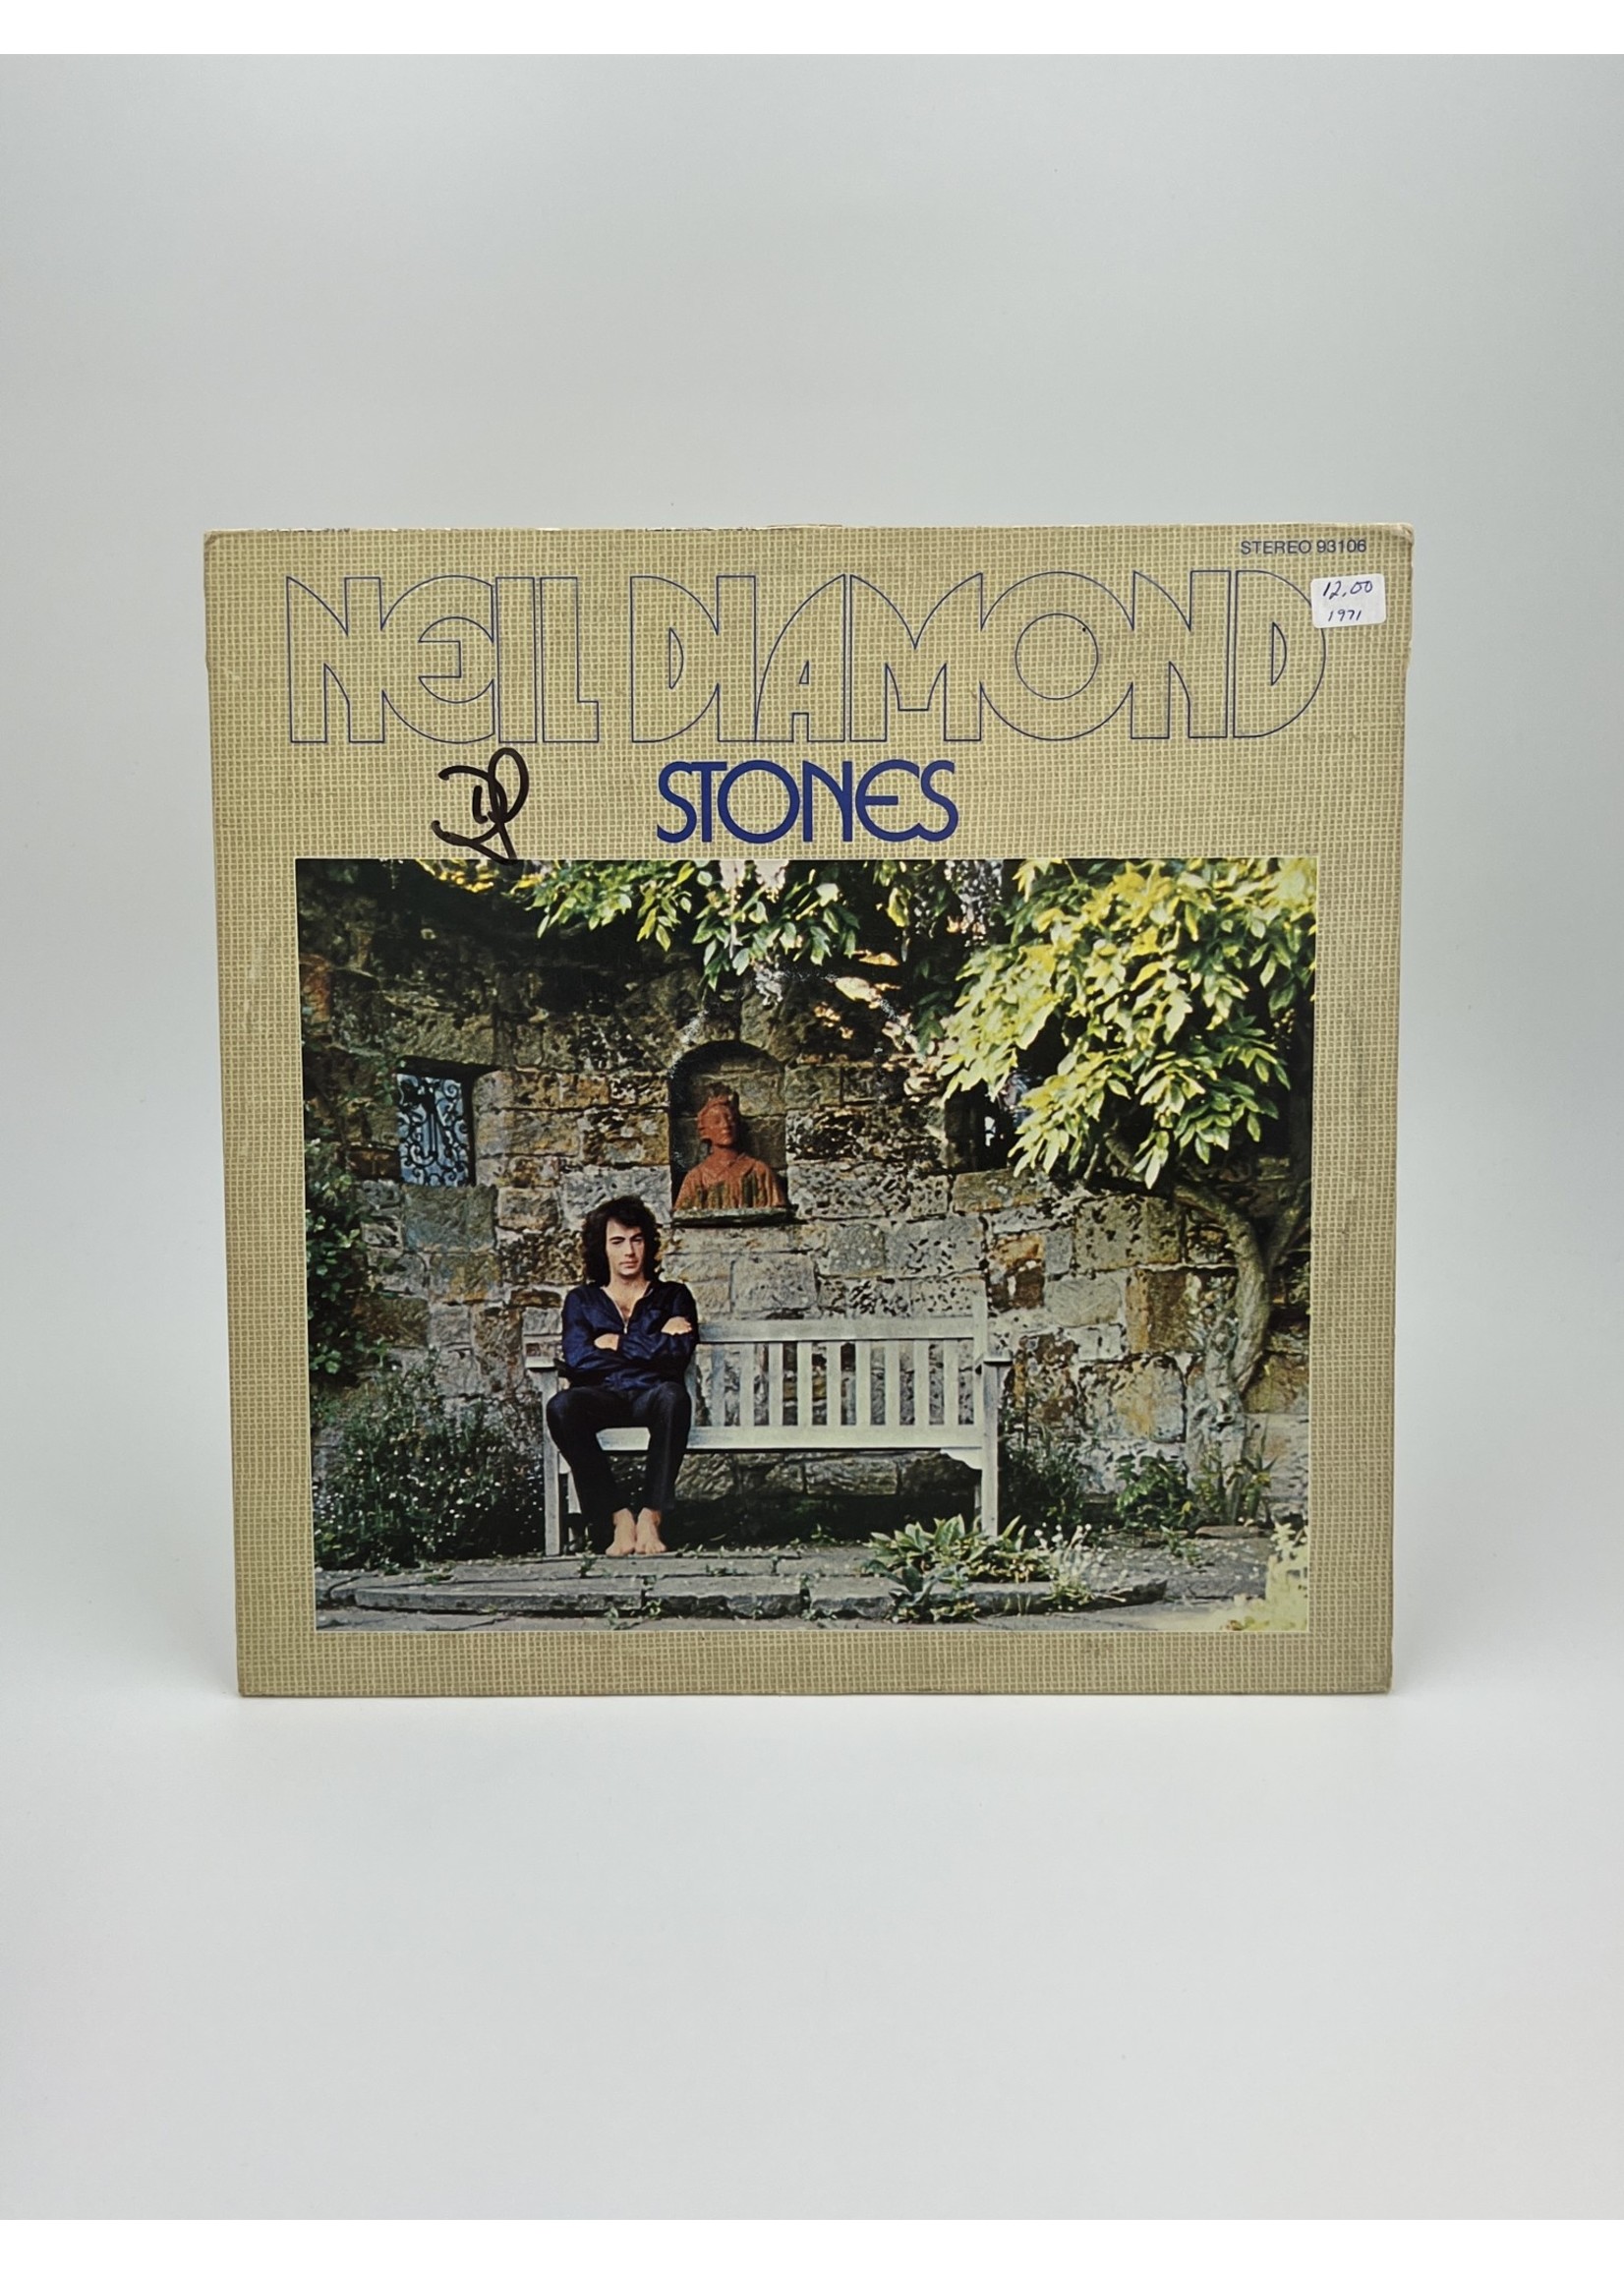 LP Neil Diamond Stones LP Record